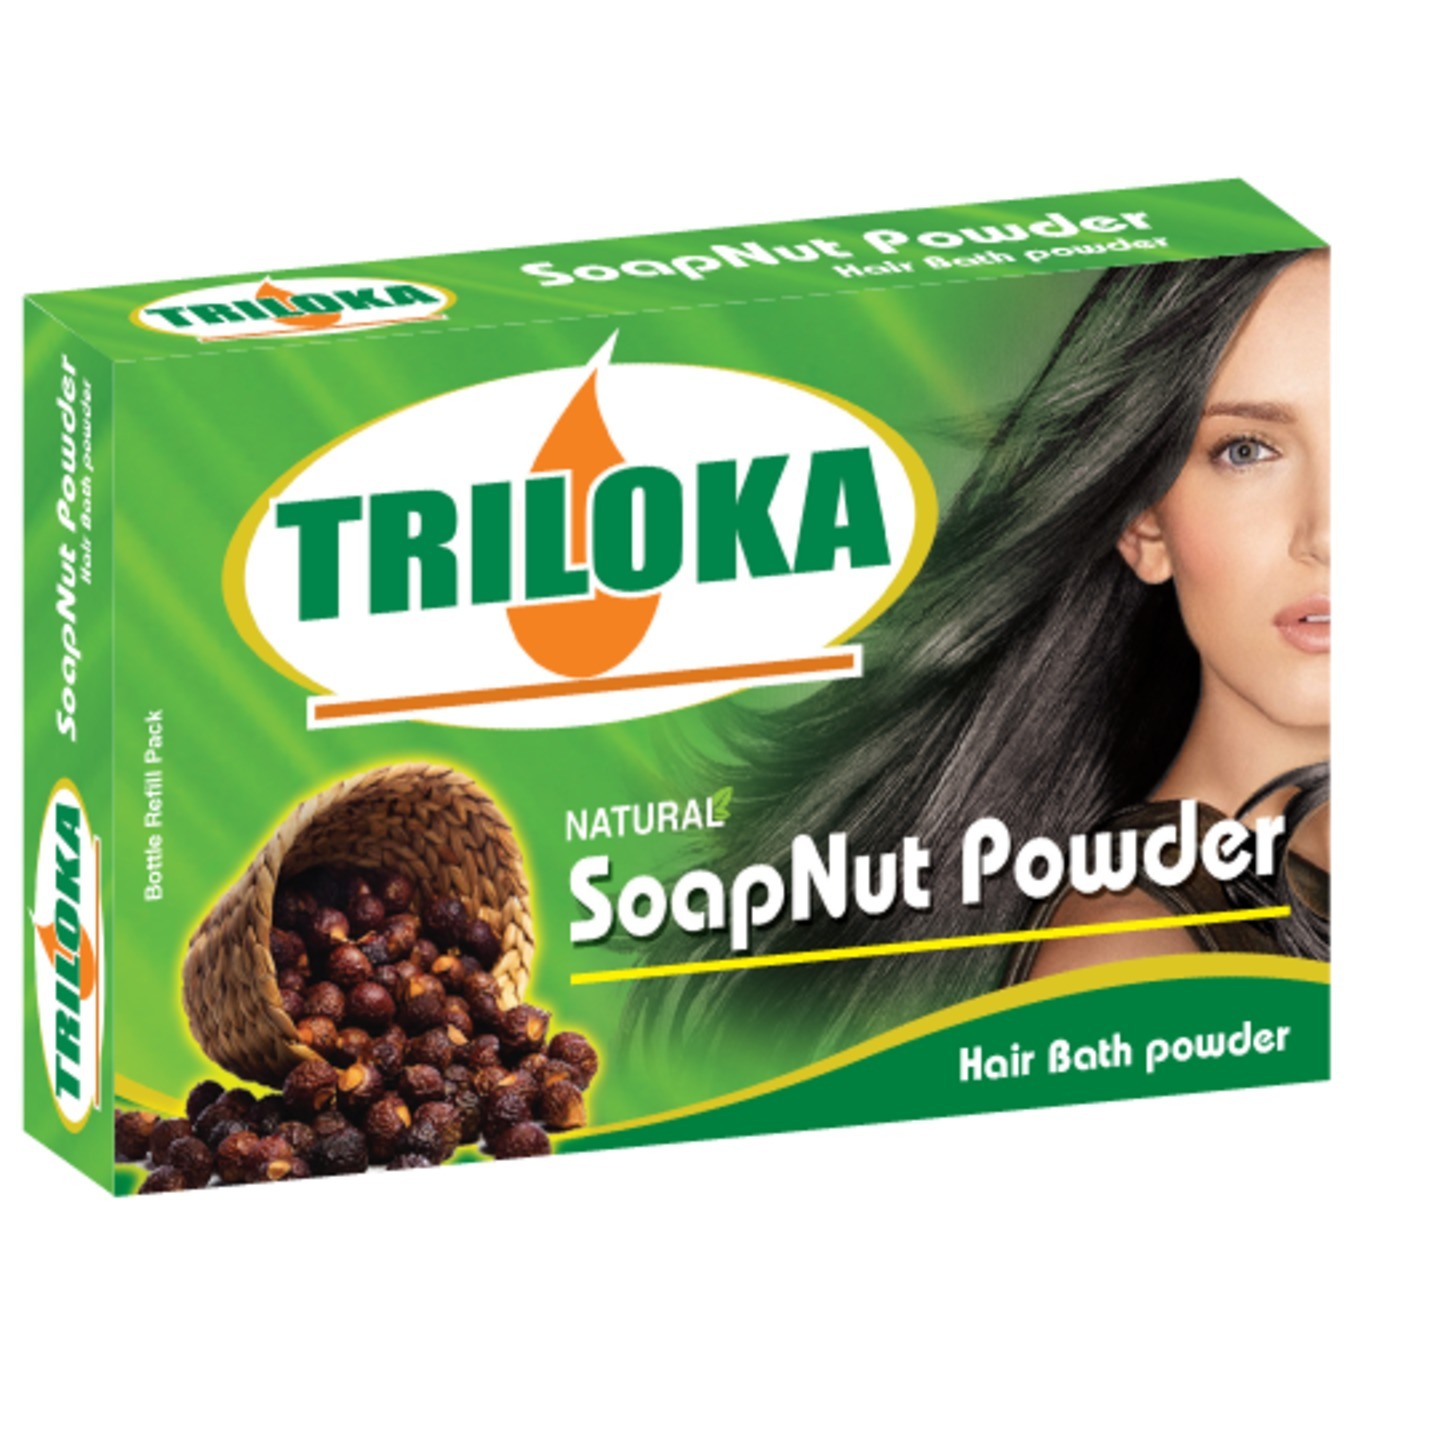 New Triloka SoapNutRita Hair Bathing Powder Re- Fill Box Pack